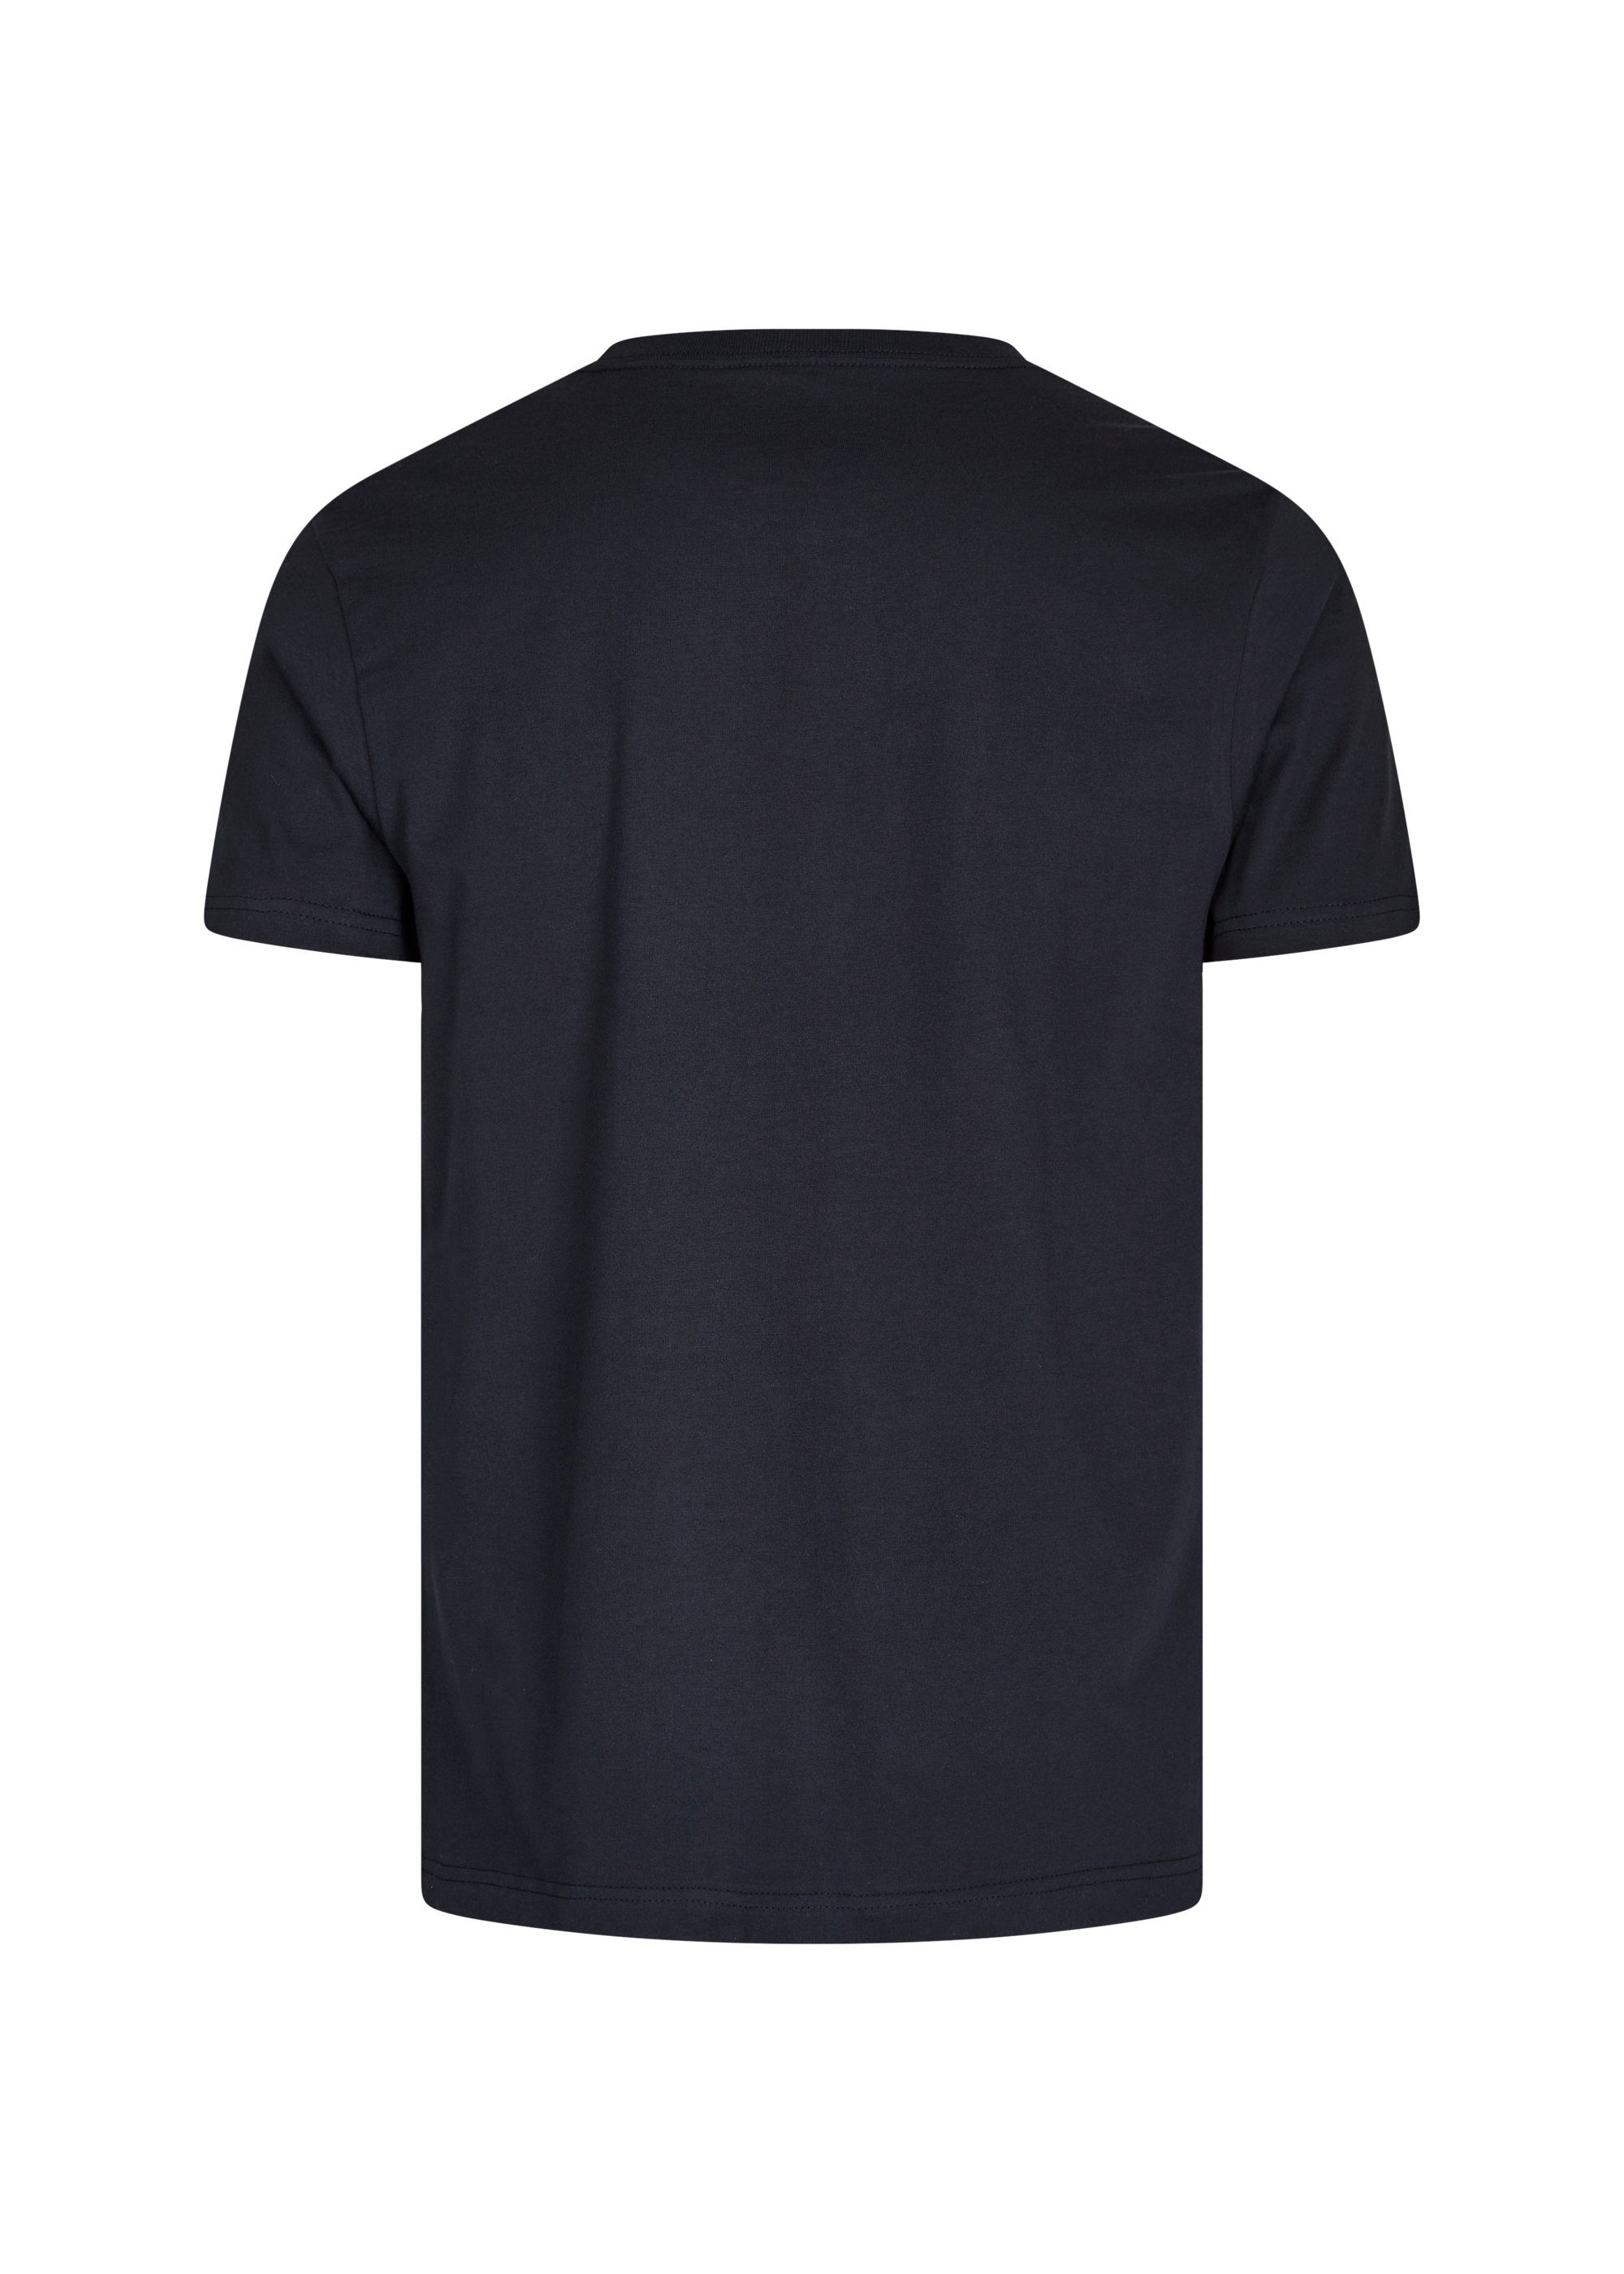 Long So Cleptomanicx mit Frontprint großem blau T-Shirt